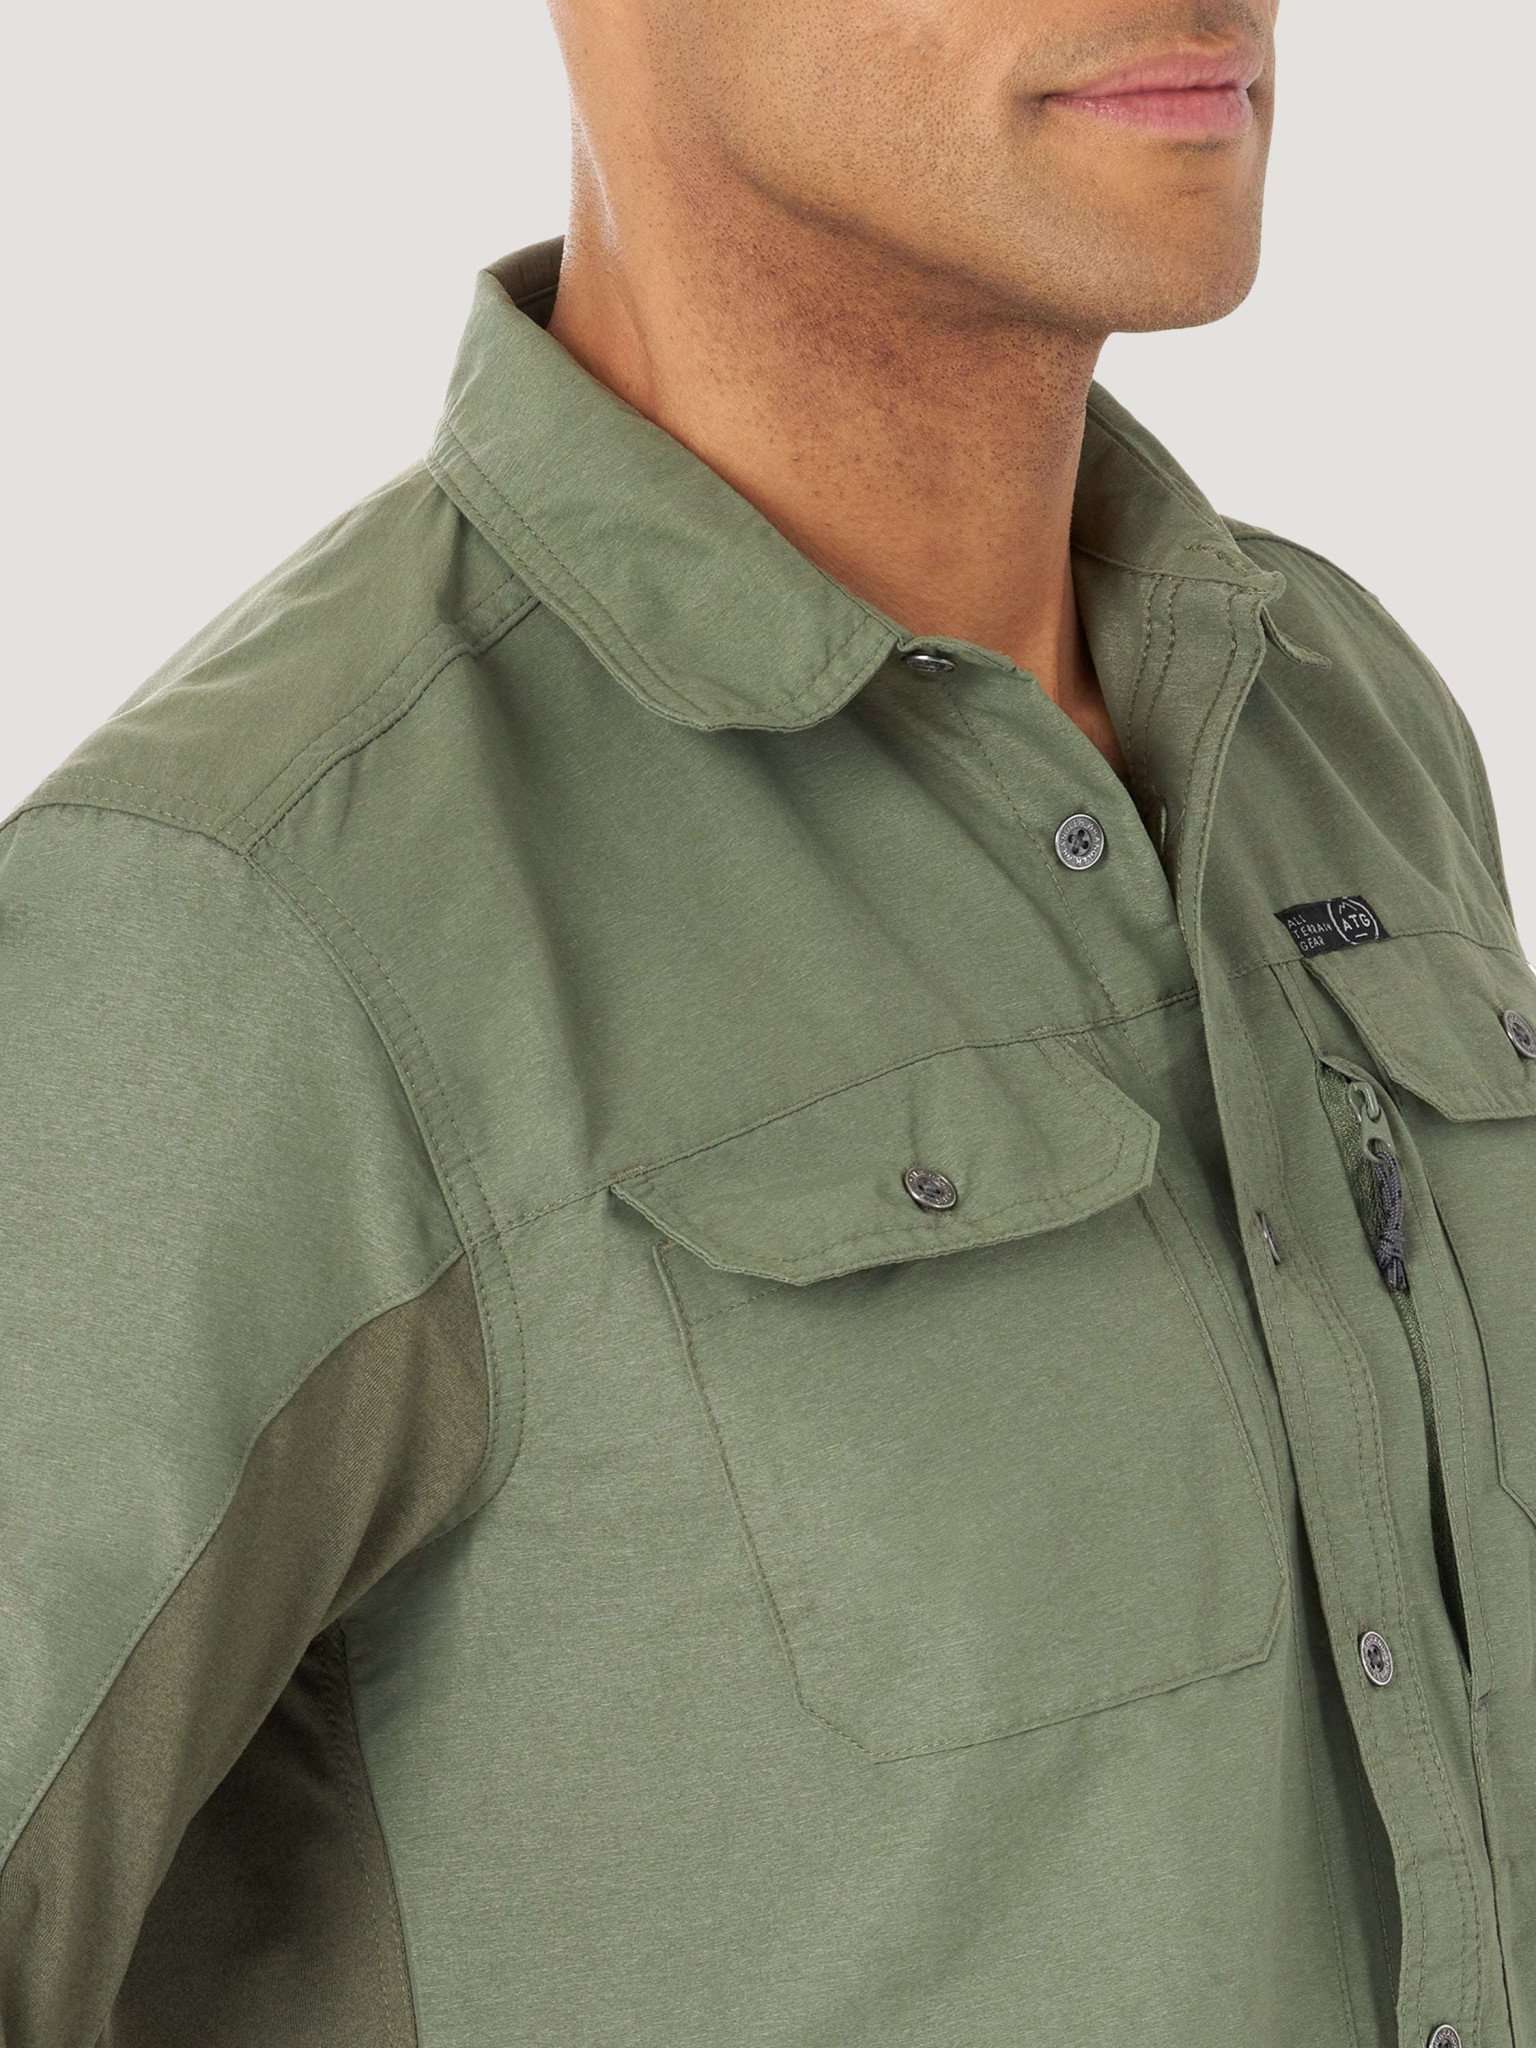 All Terrain Gear Mixed Material Shirt in Dusty Olive Hemden Wrangler   